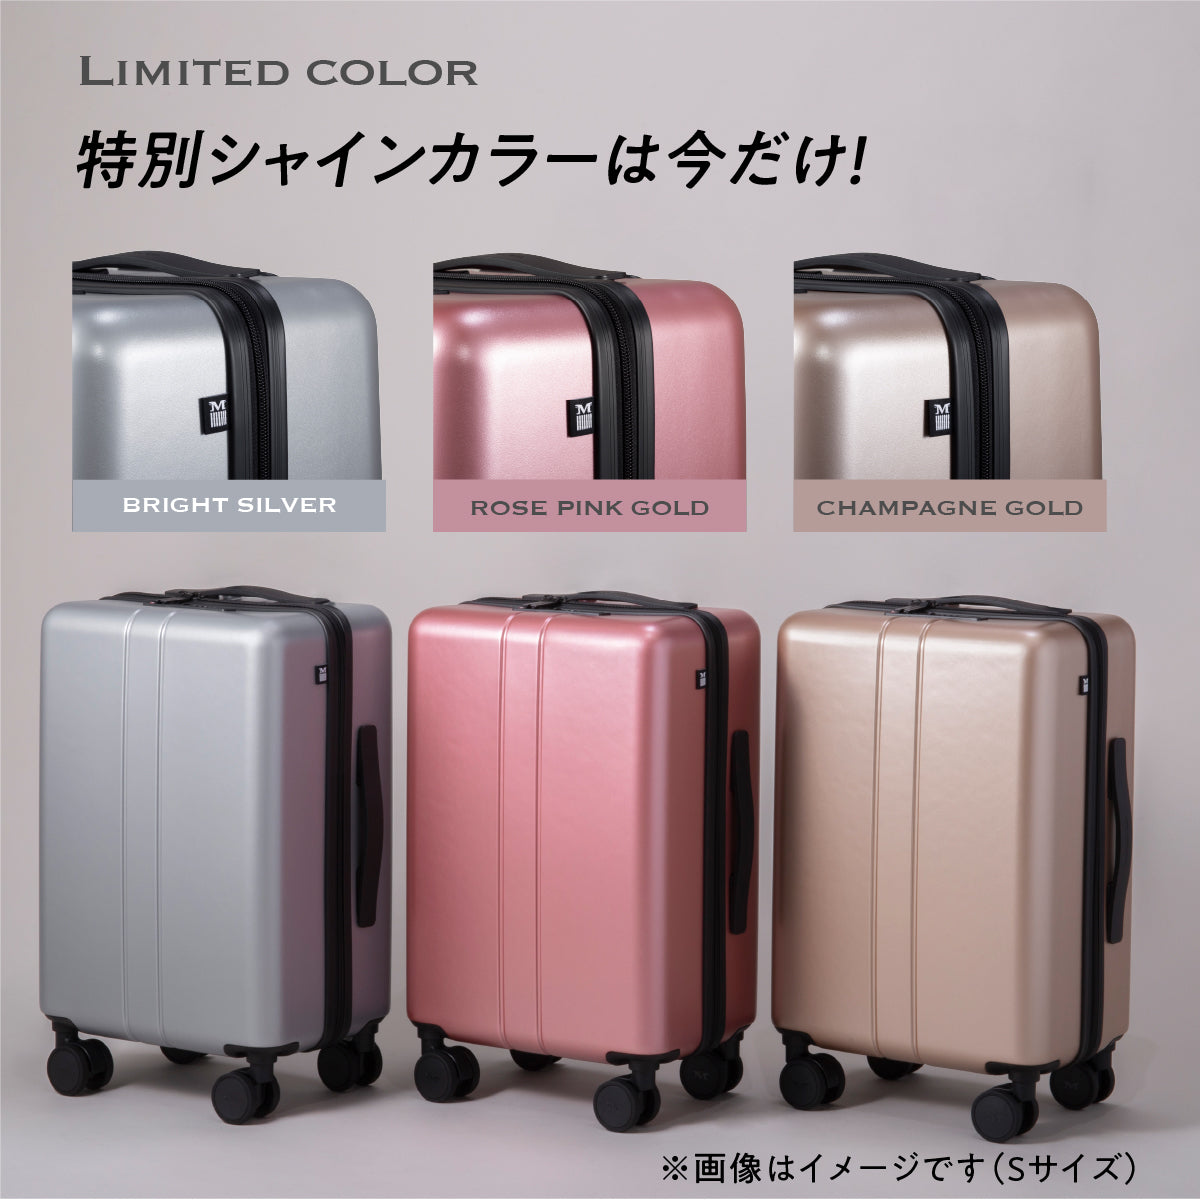 MAIMO COLOR YOU 【限定色】シャンパンゴールド スーツケース Lサムソナイト